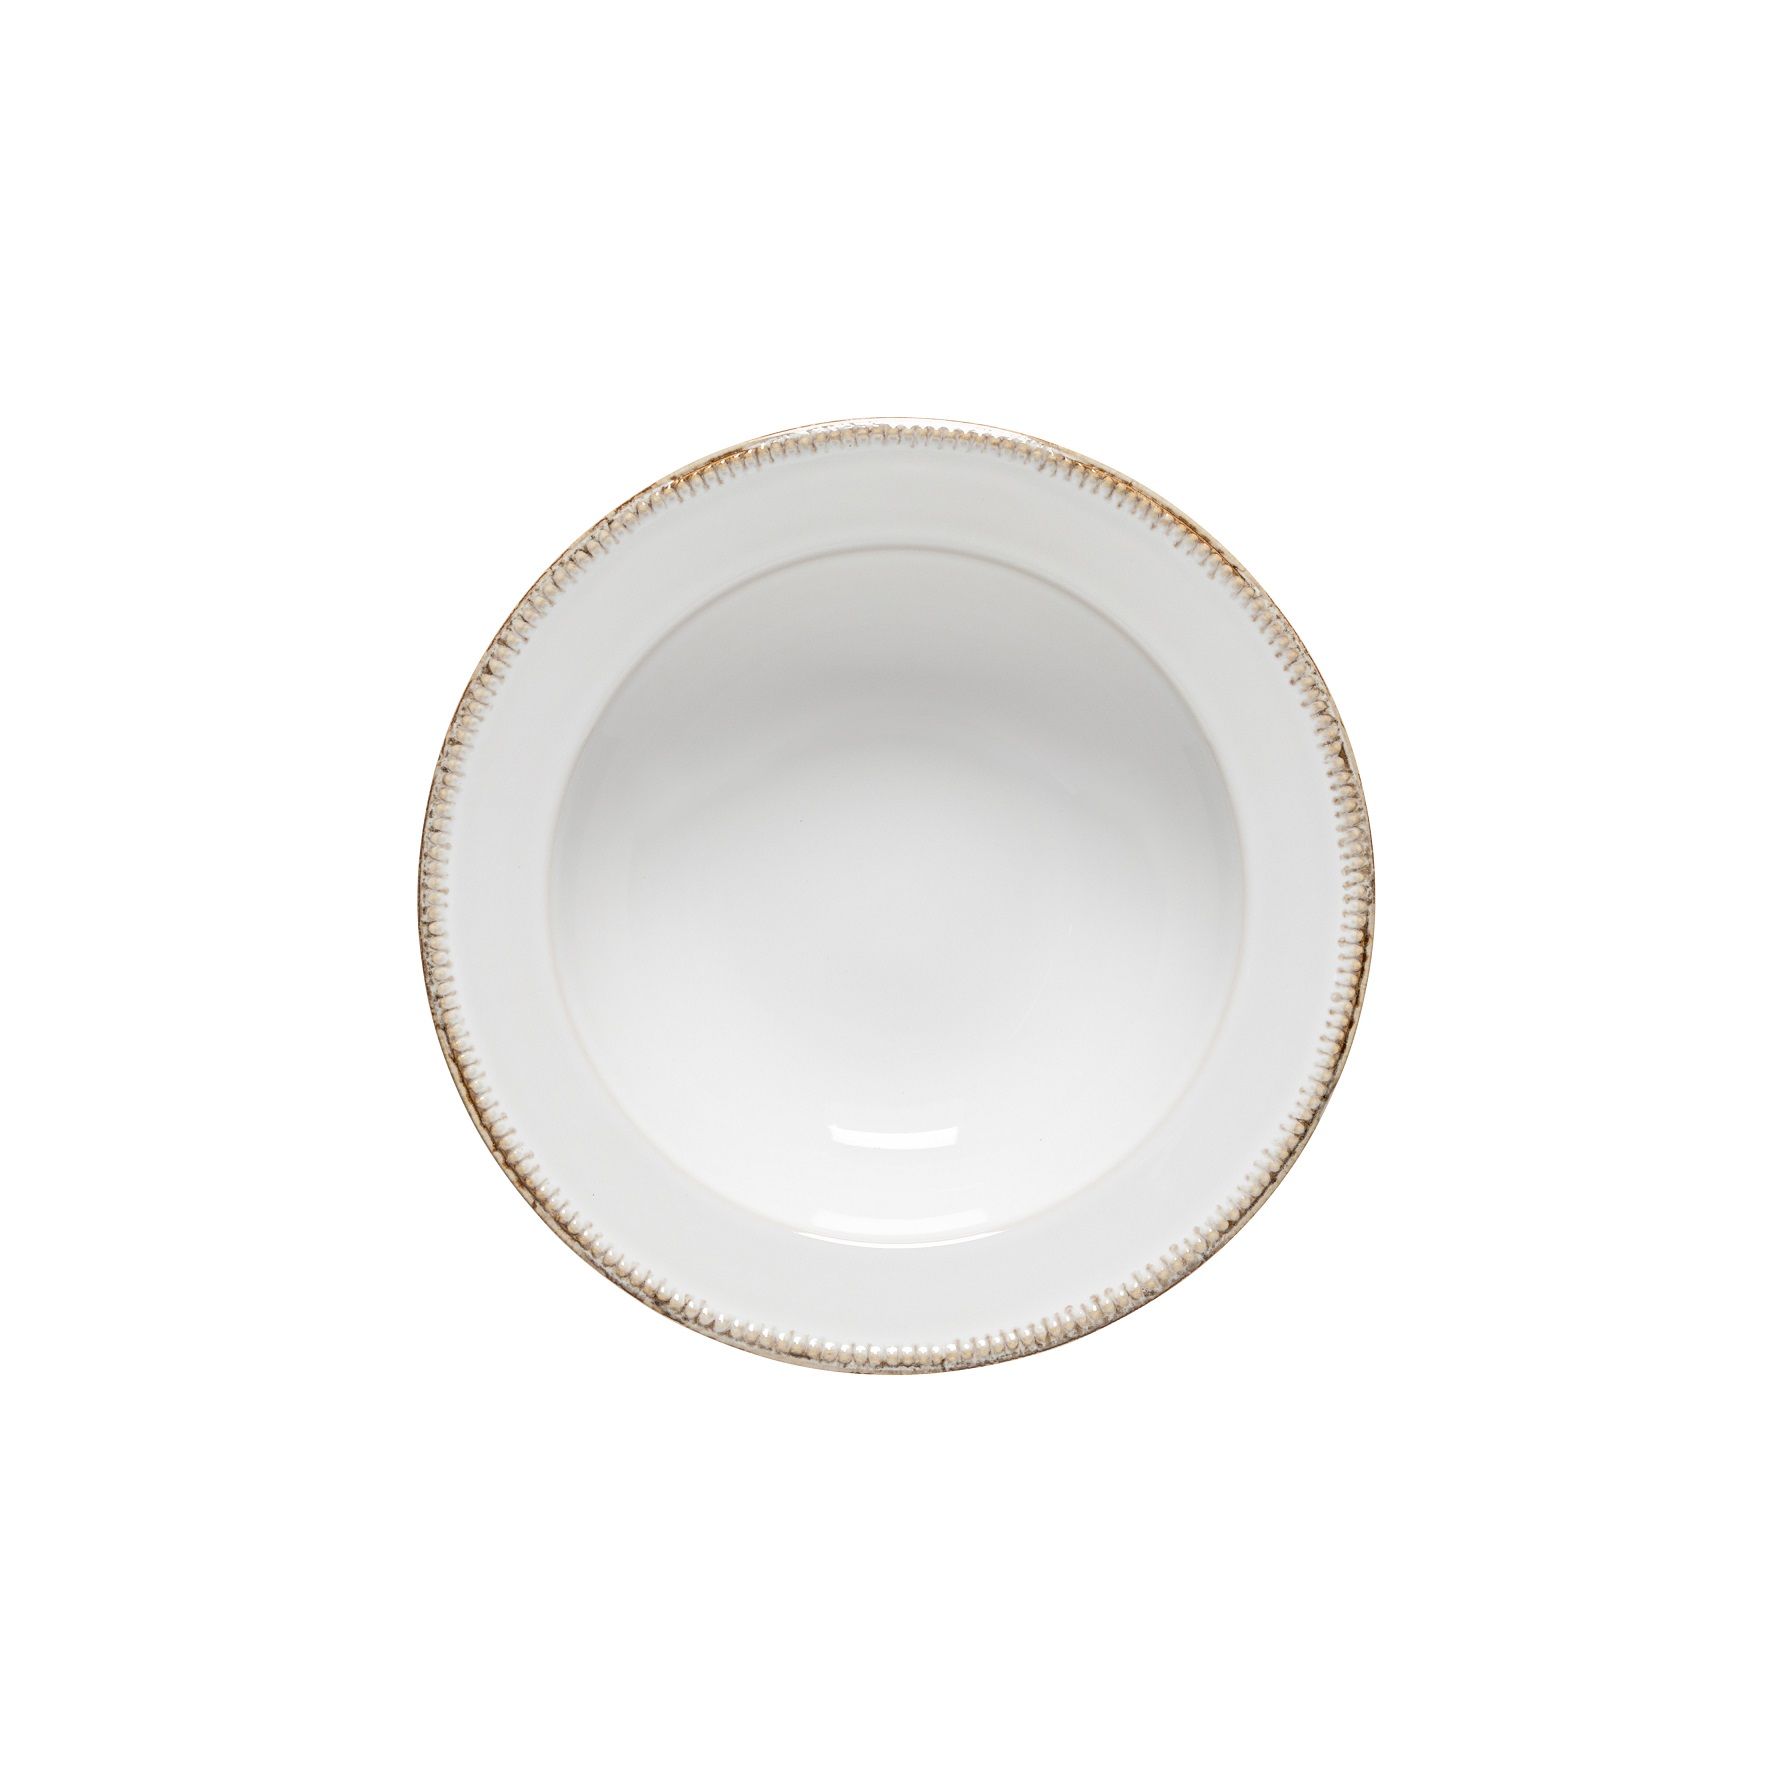 Luzia Cloud White Soup/pasta Plate 23cm 0.68l Gift